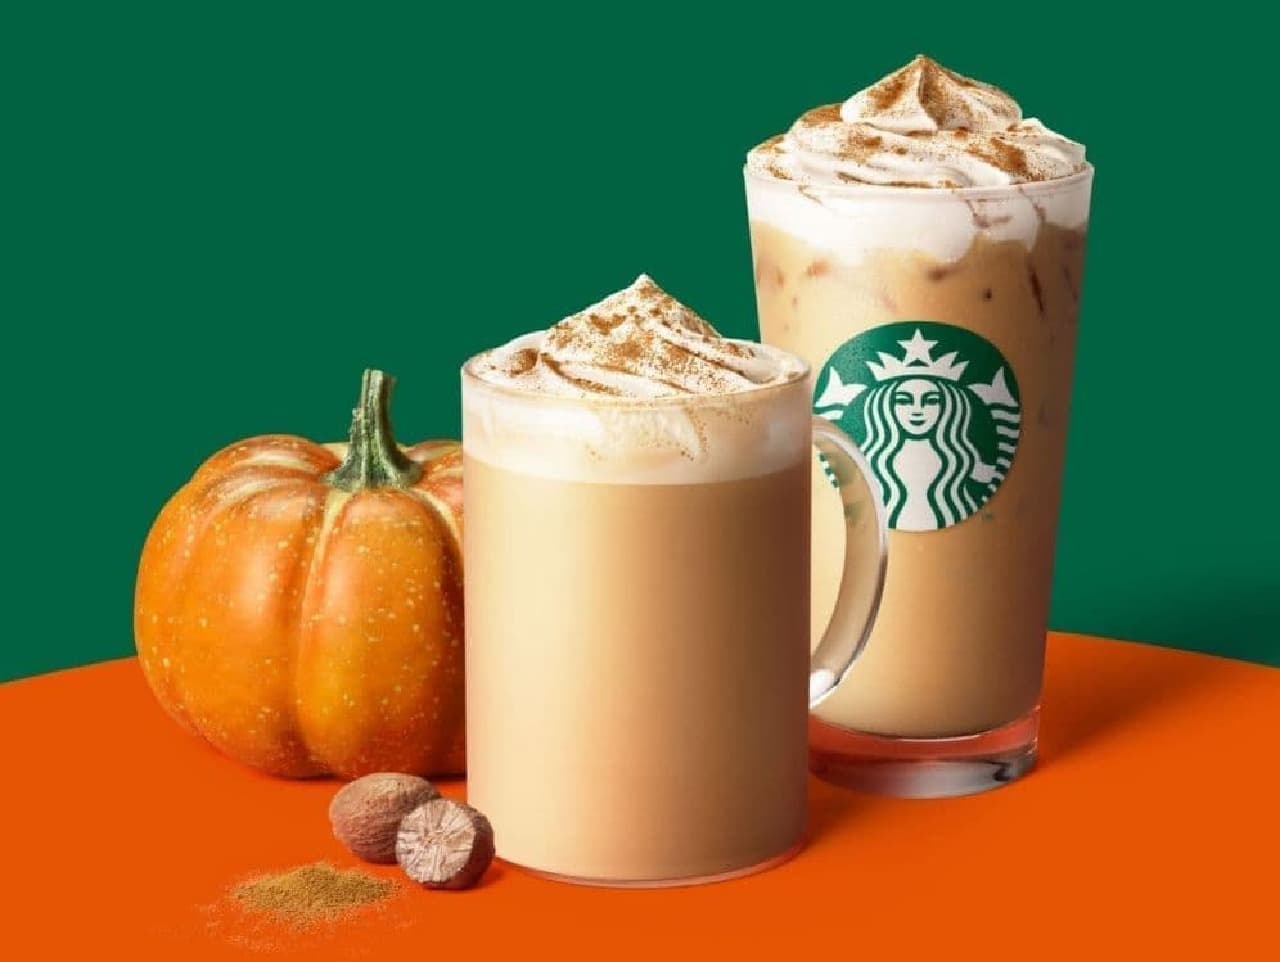 Starbucks "Pumpkin Spice Latte".